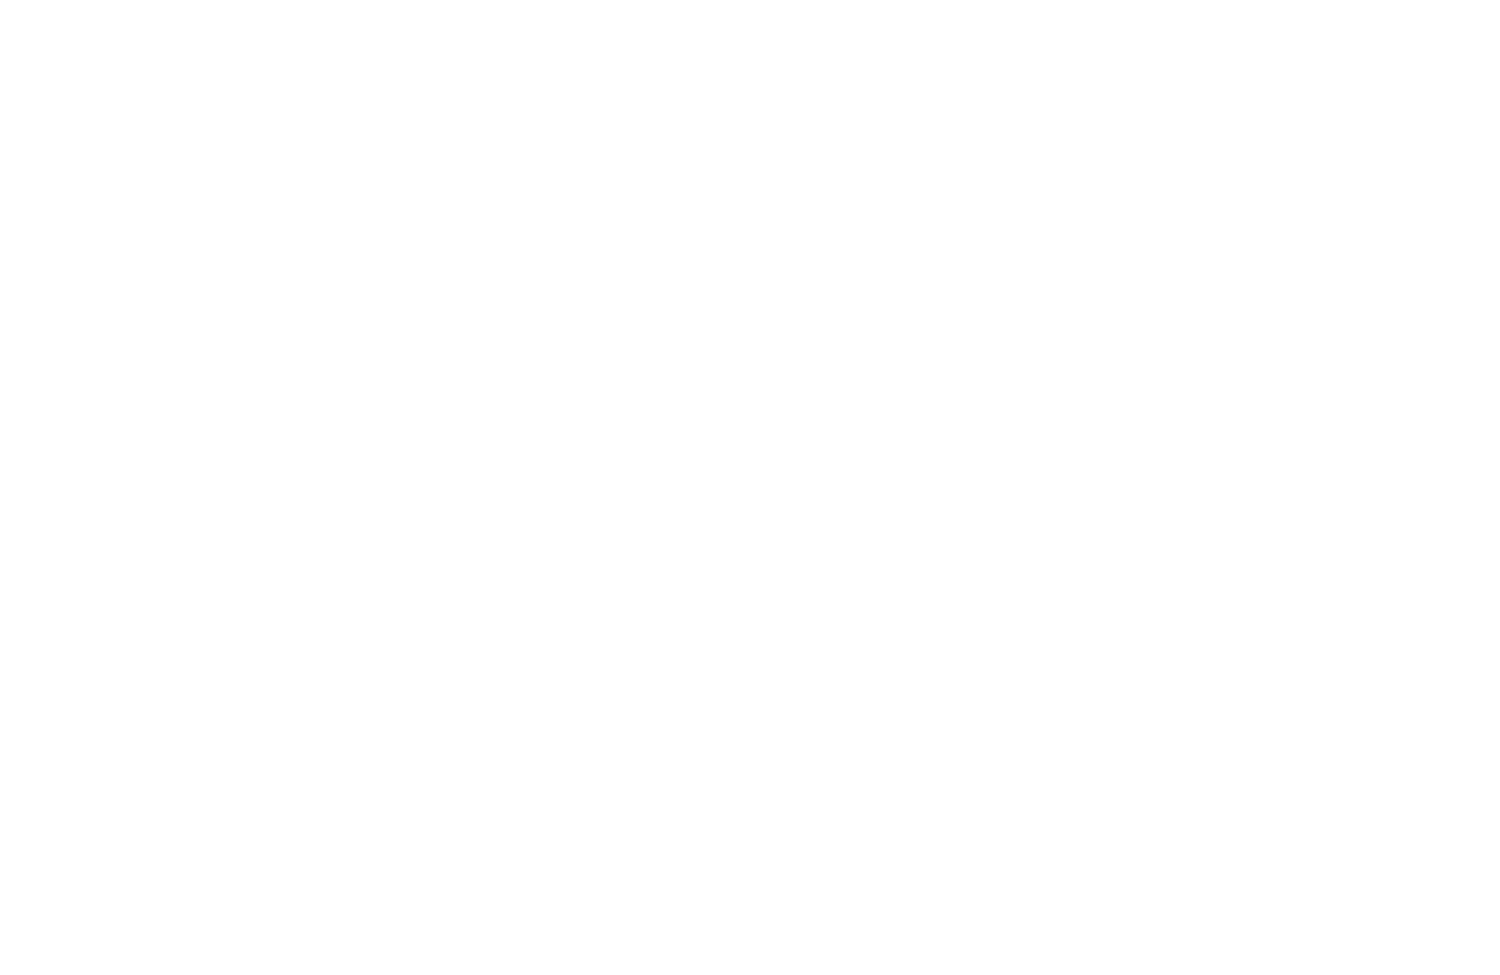 Iraqi Children Foundation